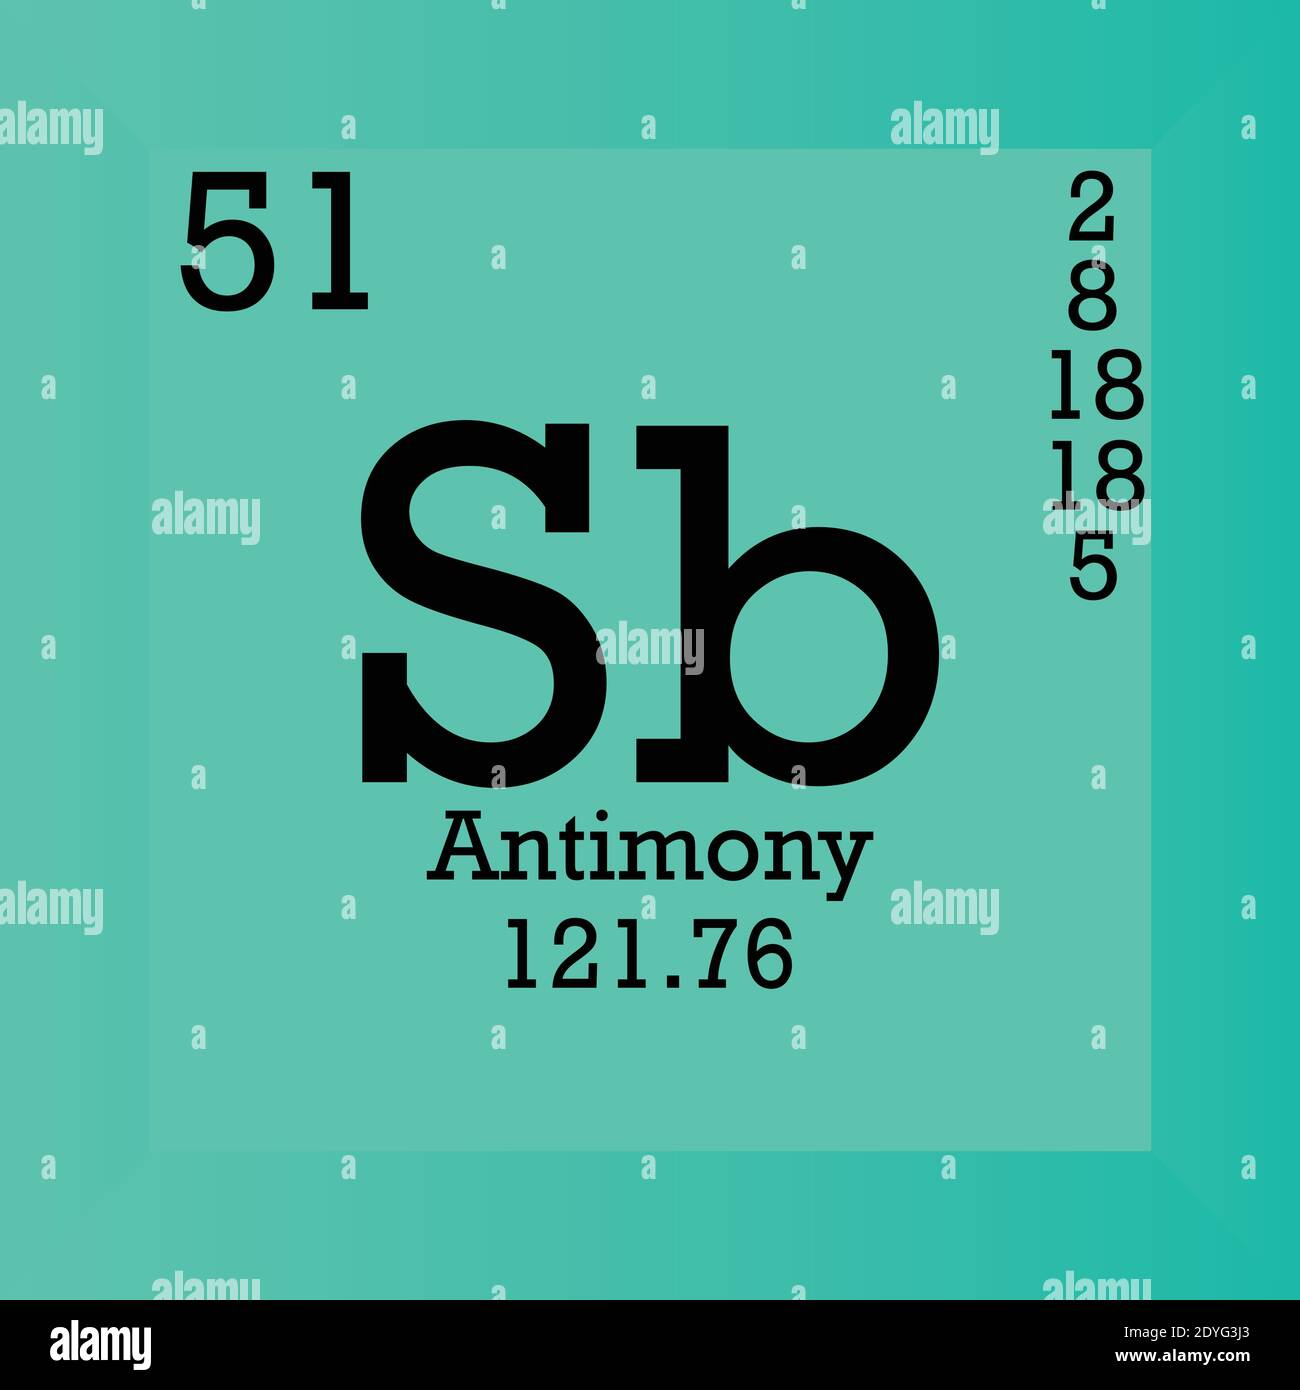 Sb Antimony Chemical Element Periodic Table Single Vector Illustration